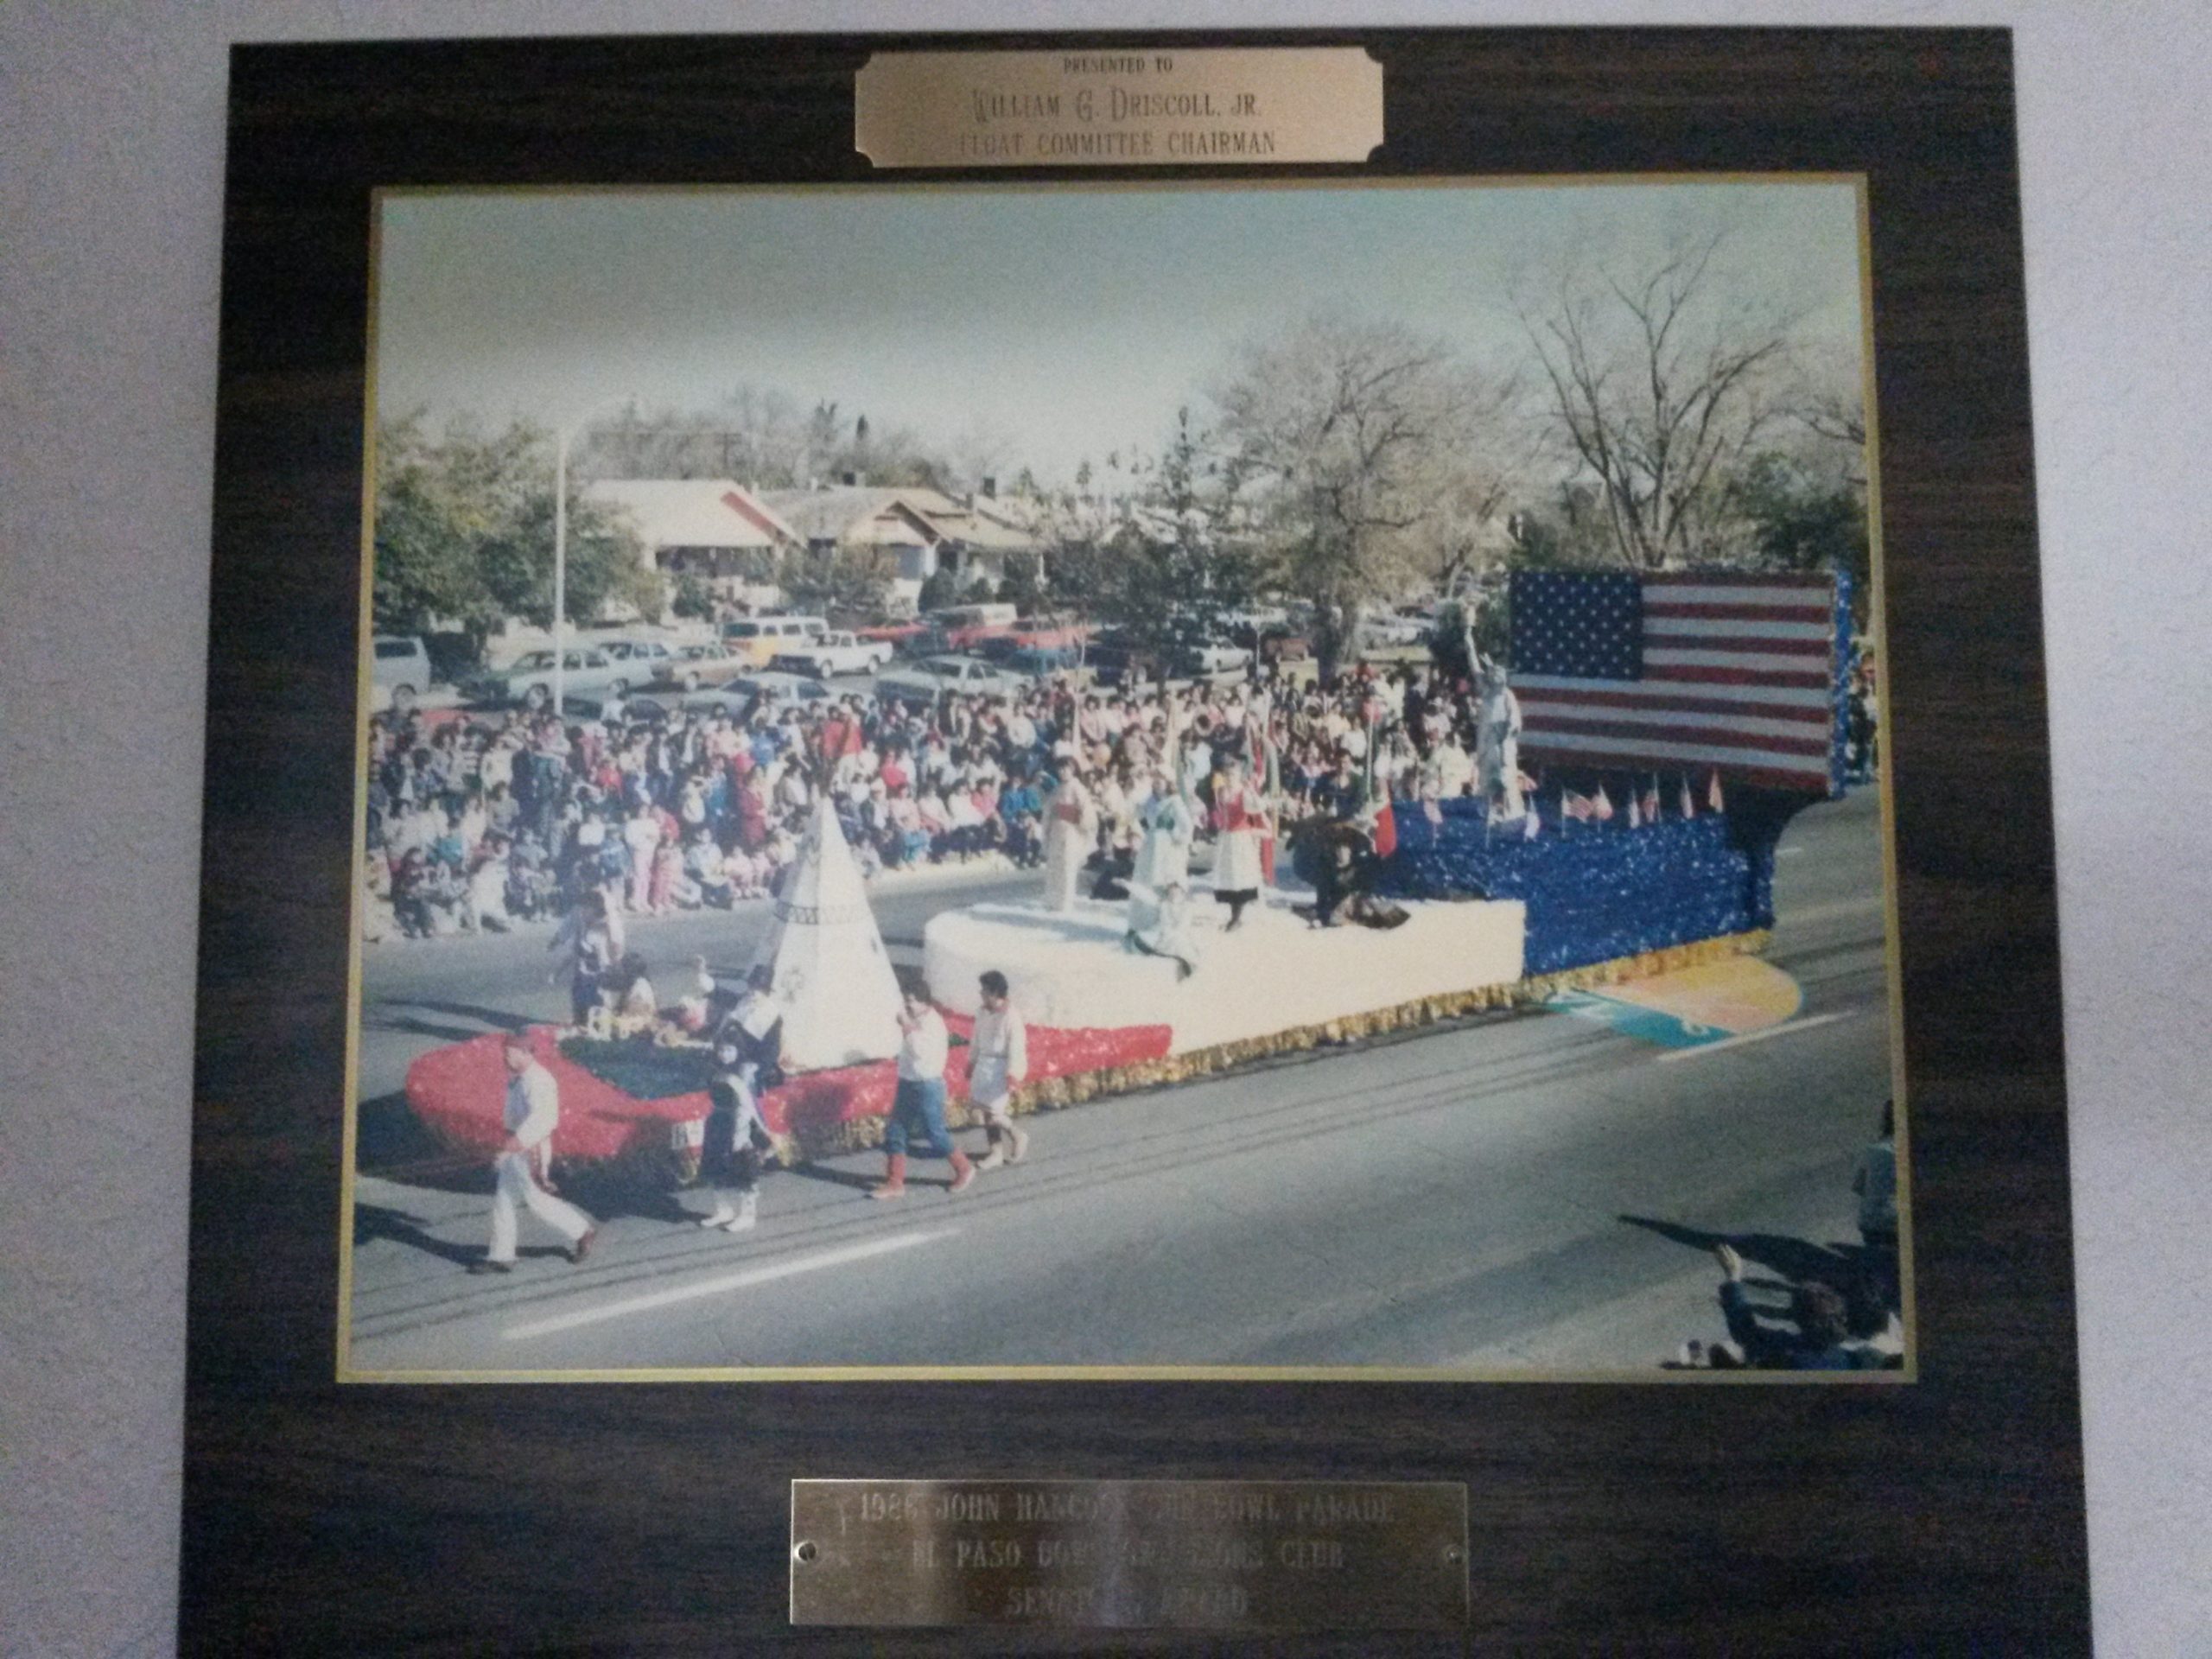 1991 Sun Bowl parade EPDT float, Bill Driscoll, President